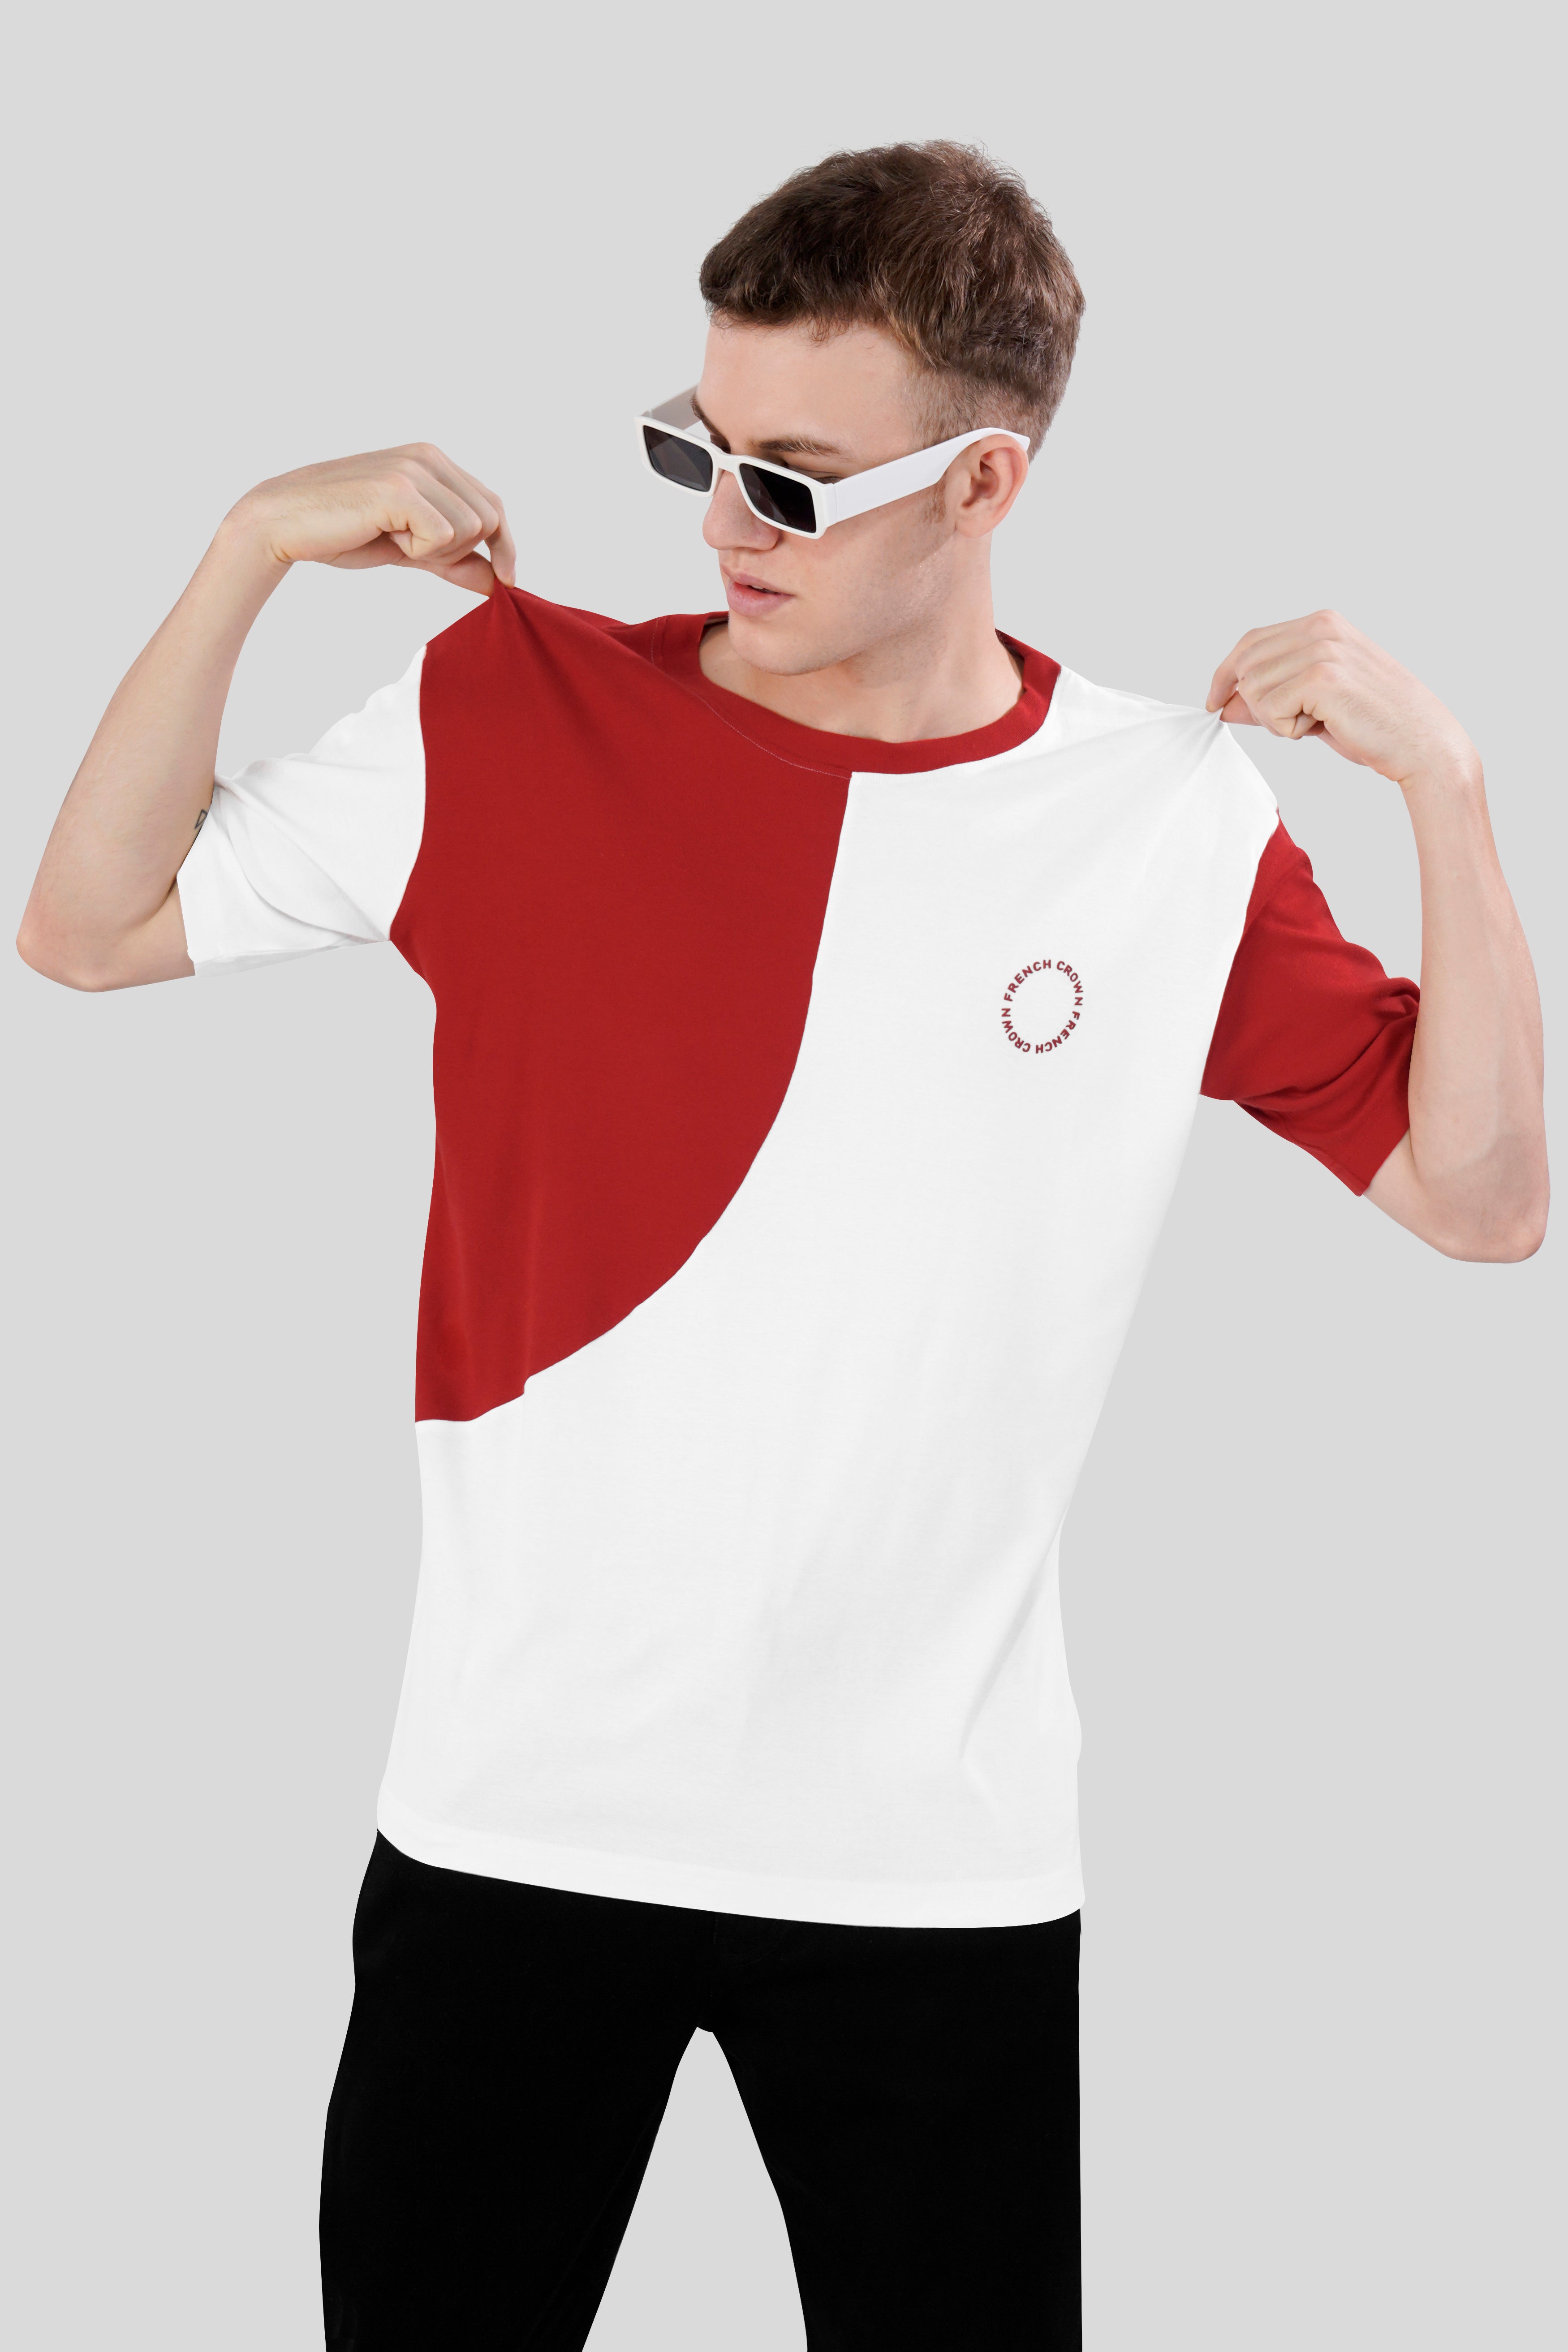 Bright White with Falu Red Premium Cotton T-shirt TS949-S, TS949-M, TS949-L, TS949-XL, TS949-XXL